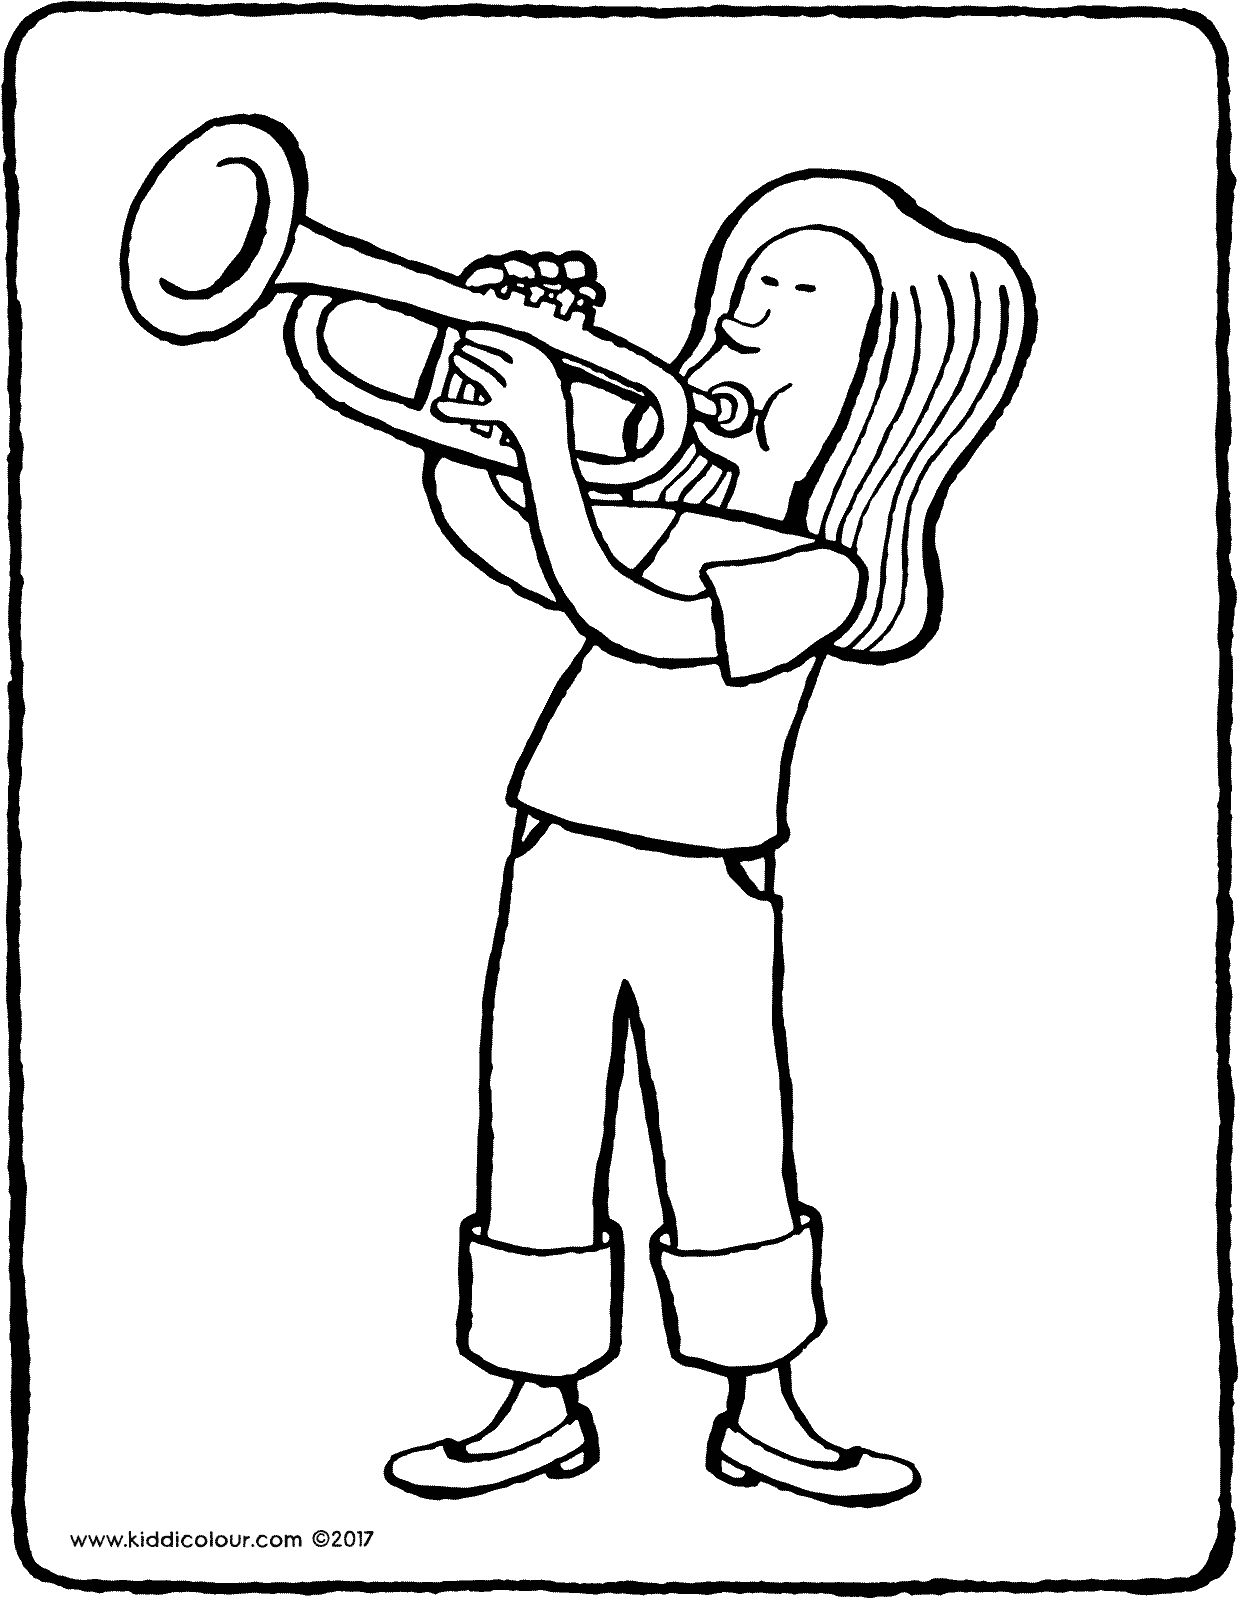 Сжатая труба на болтах (102): Вкладка «Рисунок»